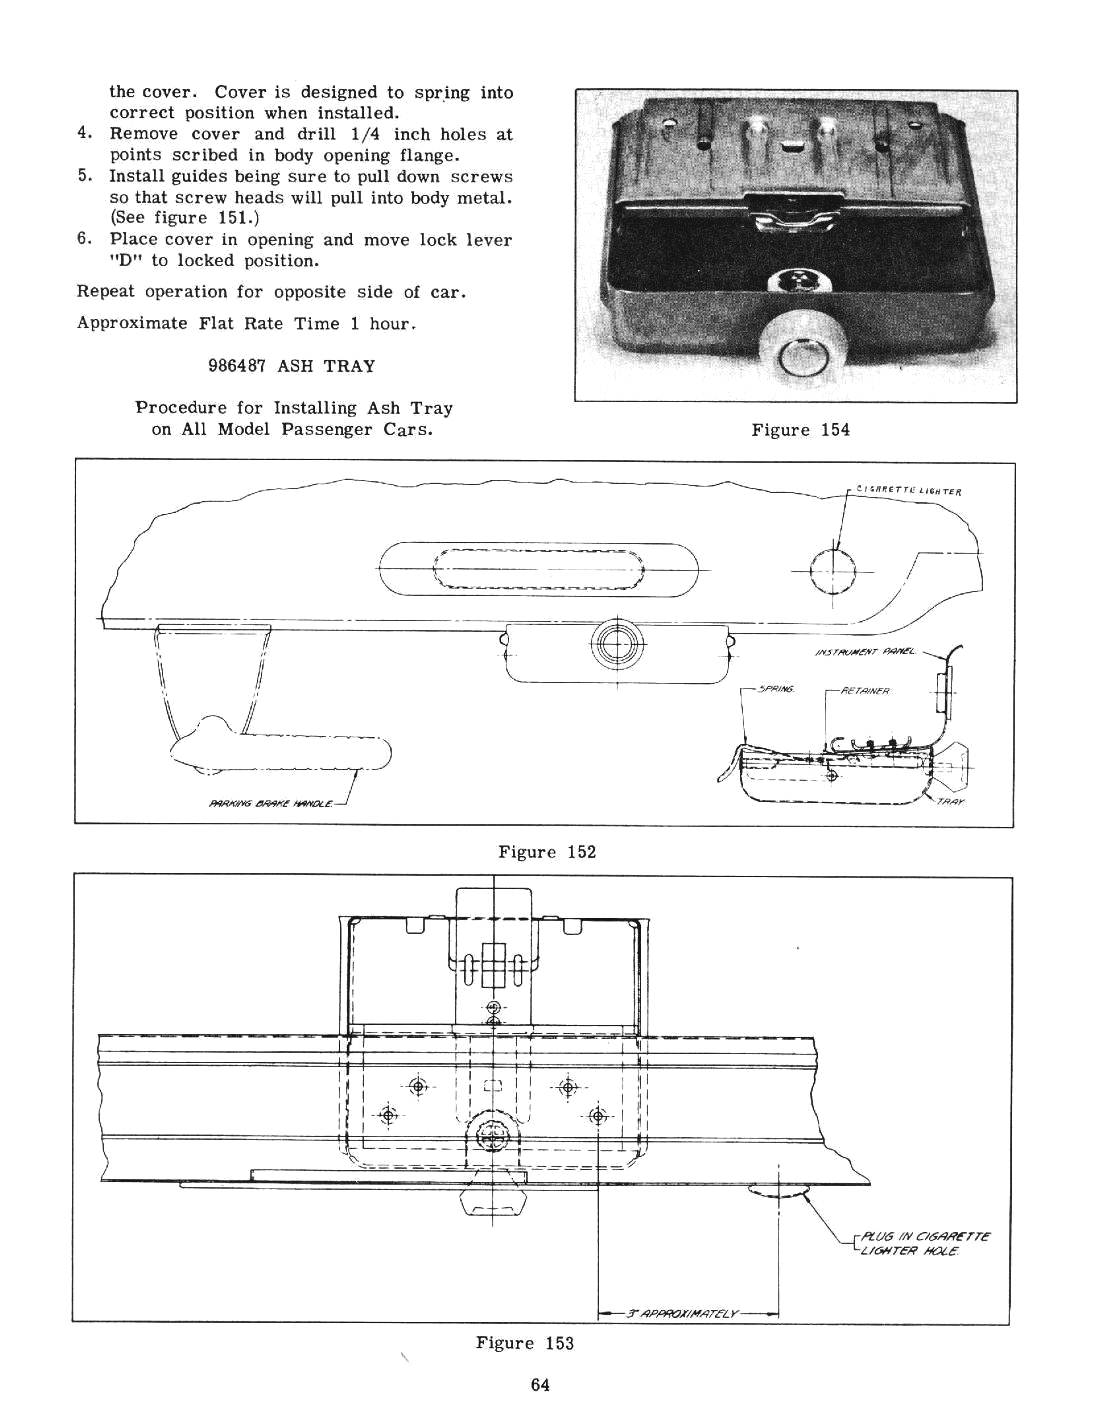 1951_Chevrolet_Acc_Manual-64